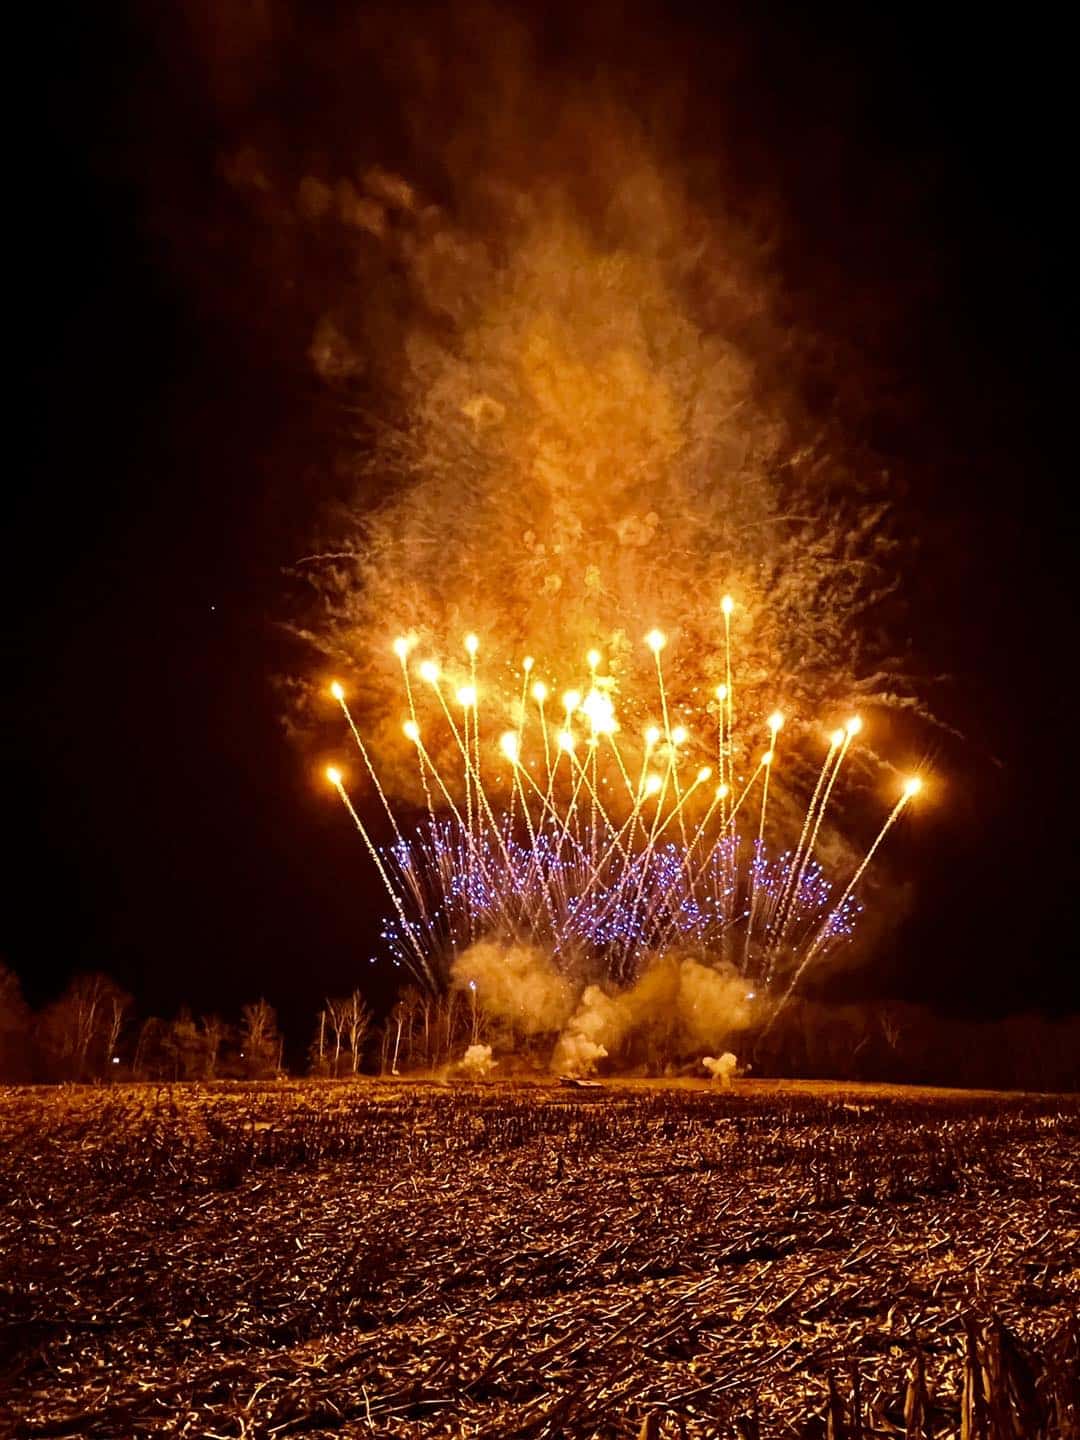 Northstar Fireworks - Display in a Field